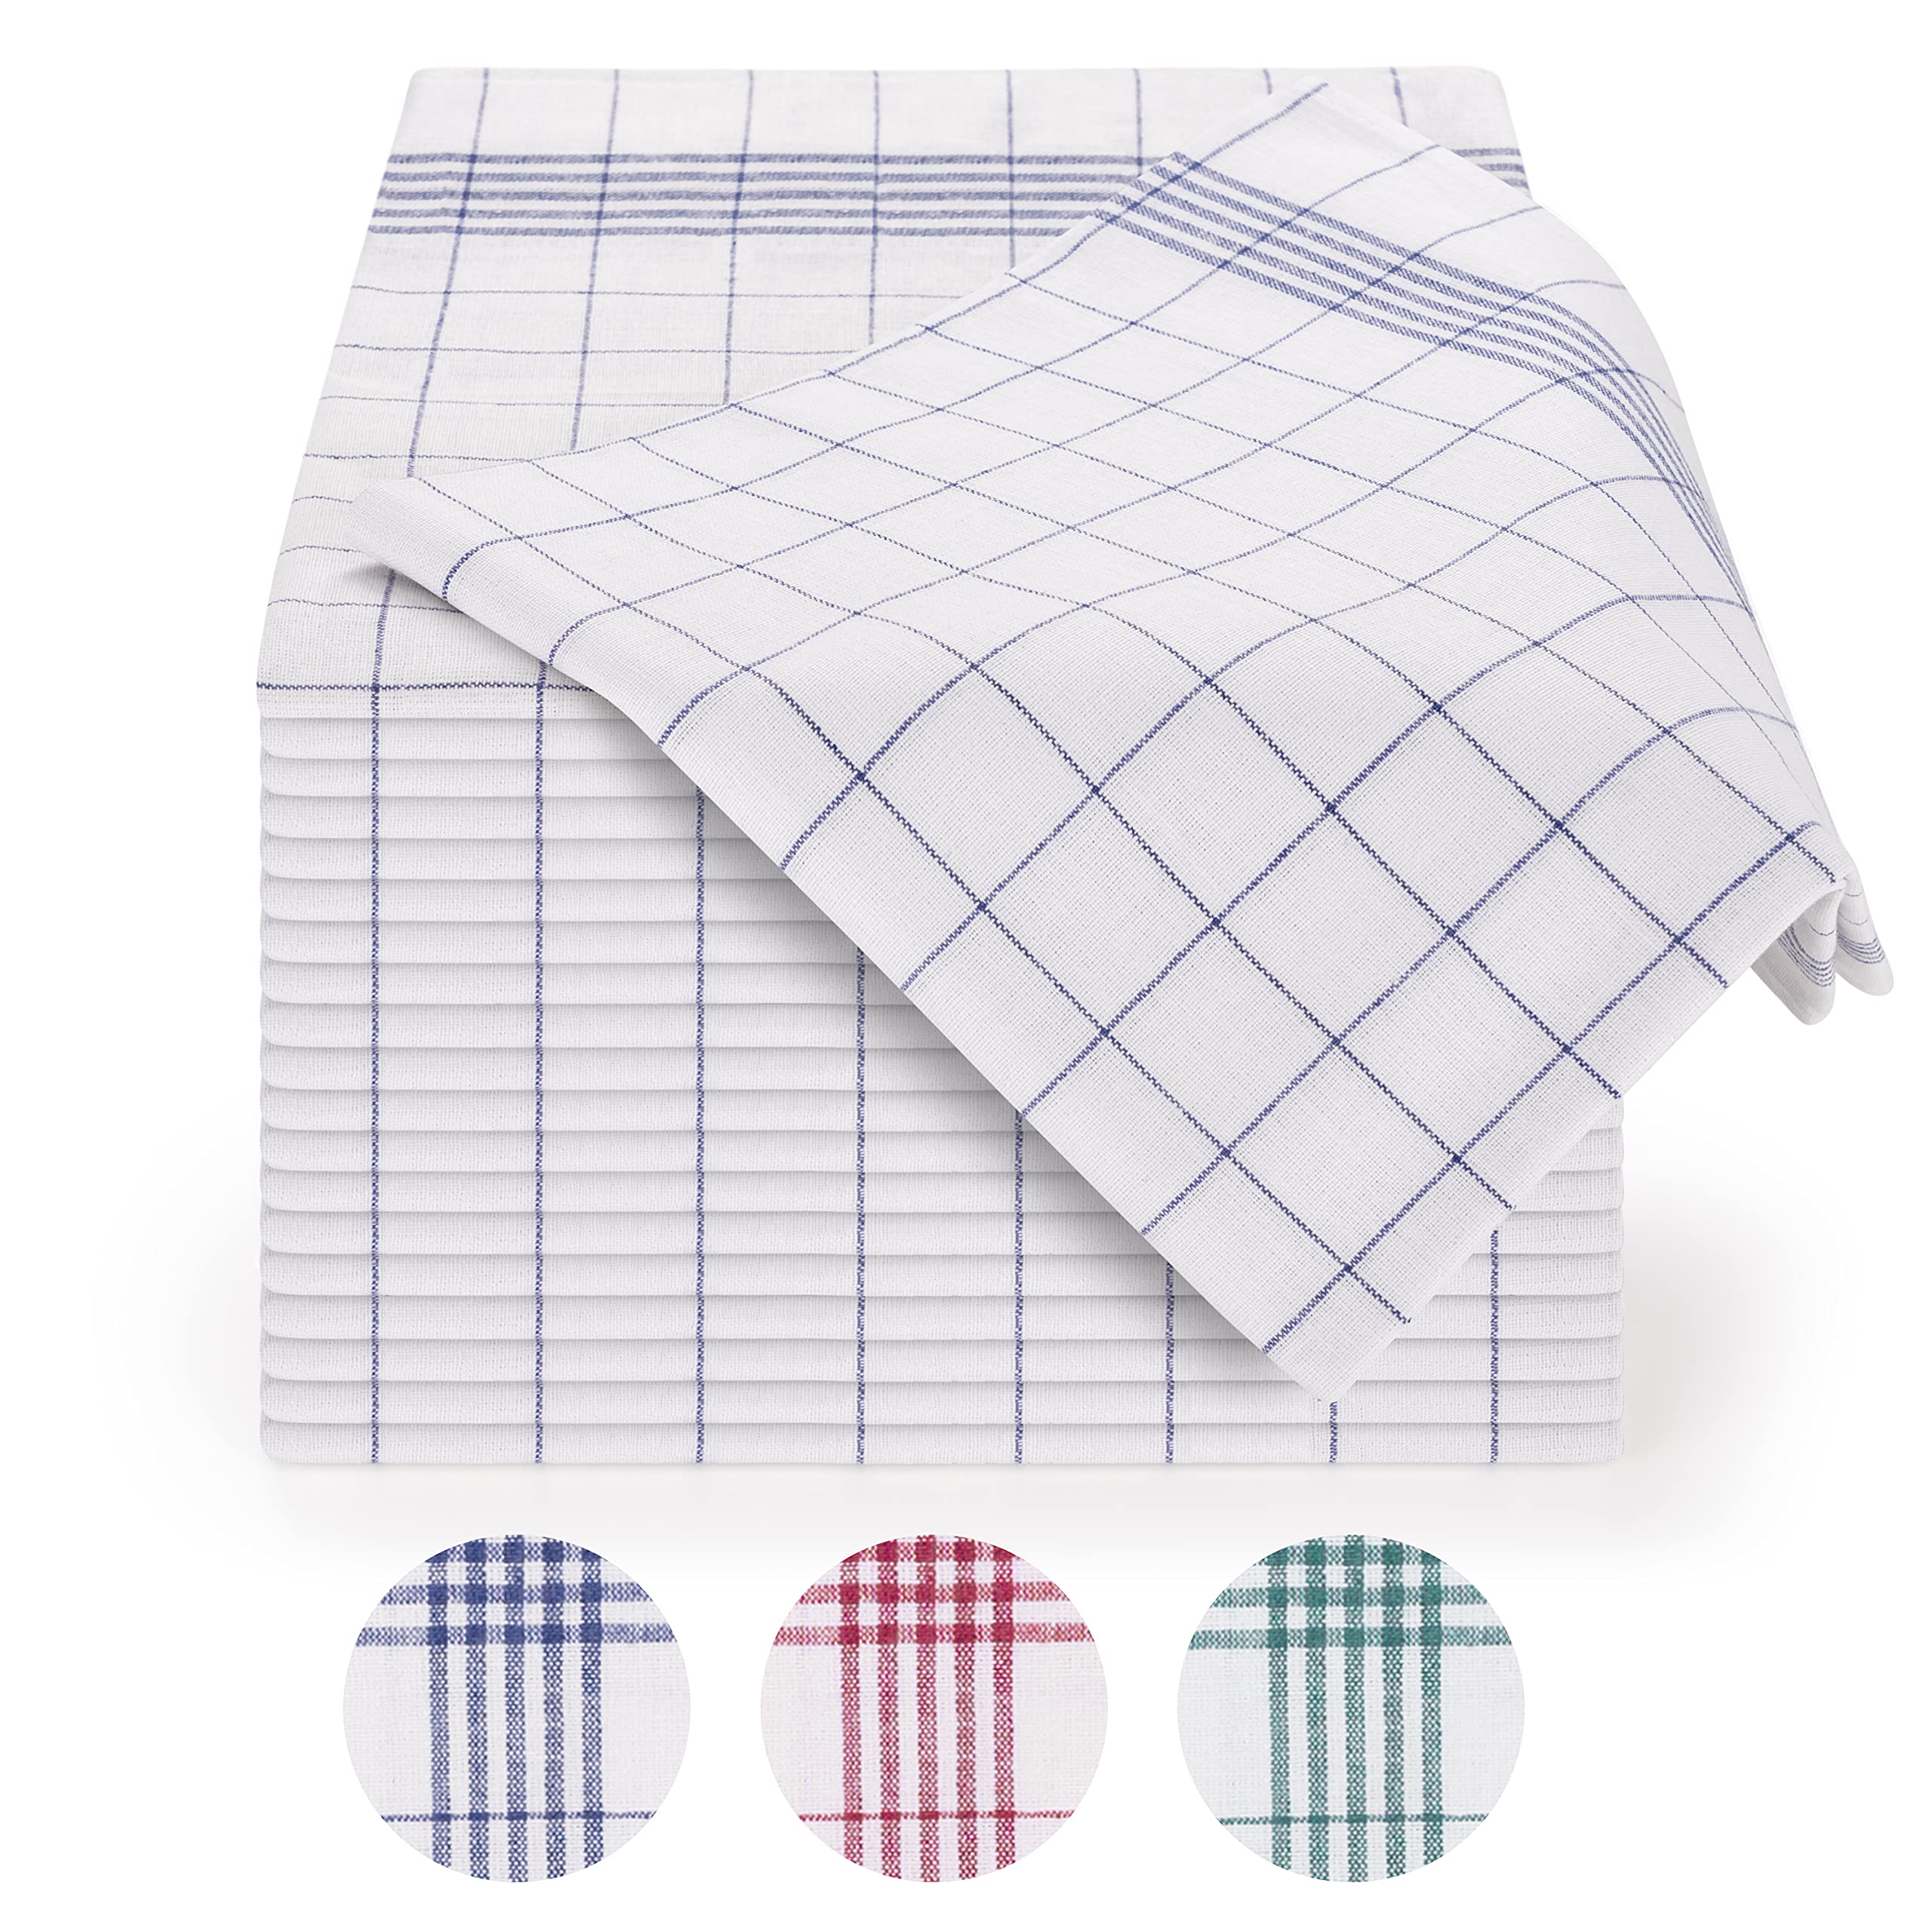 Blumtal Premium Tea Towels for Kitchen - Set of 10 Kitchen Towels, High-Absorbent, 100% Cotton, blue checked, 50x70cm